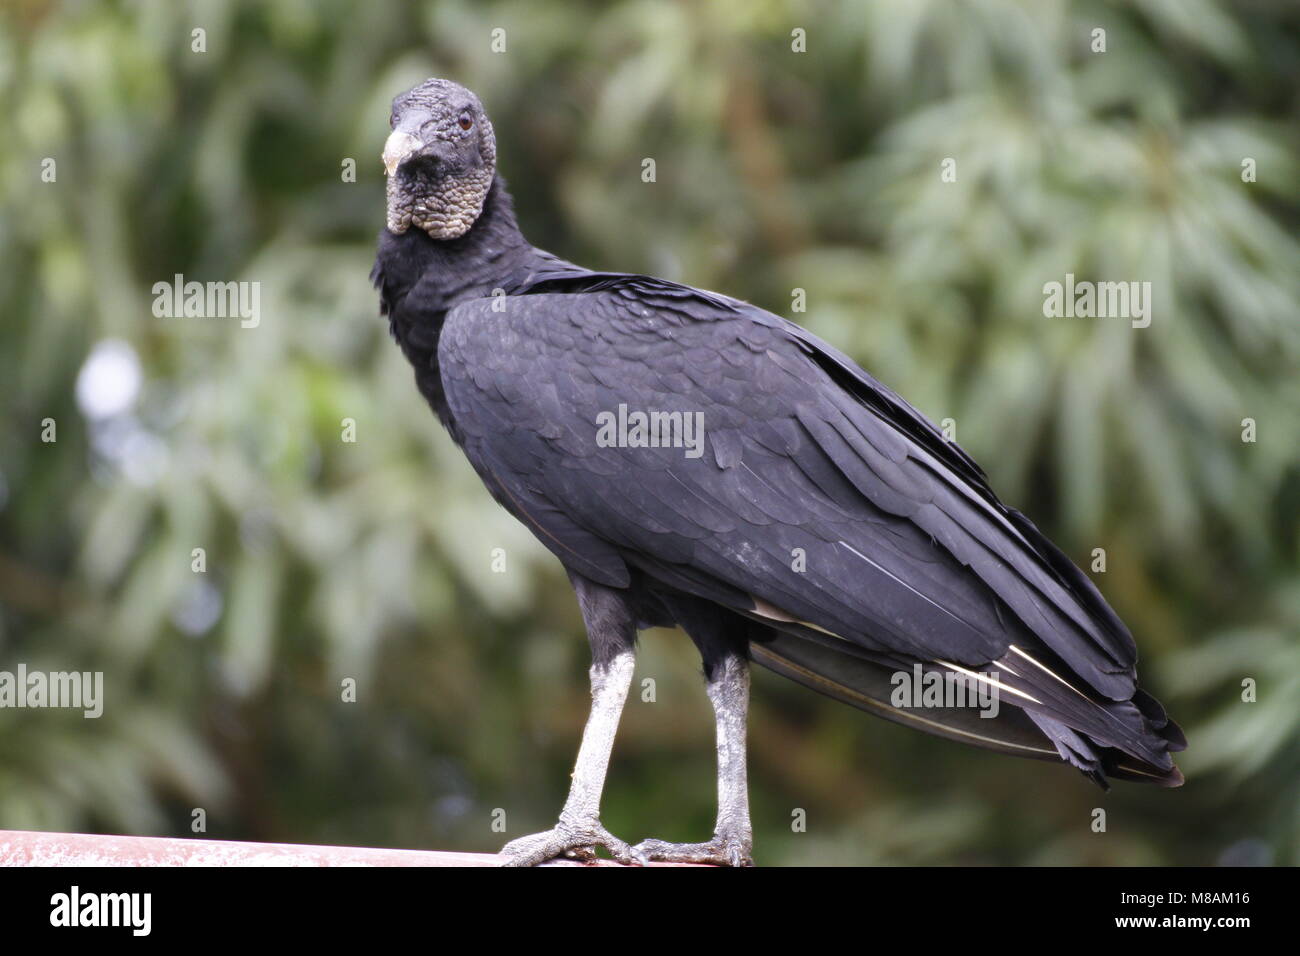 Southern American Black Vulture in Cahuita, Costa Rica Stock Photo